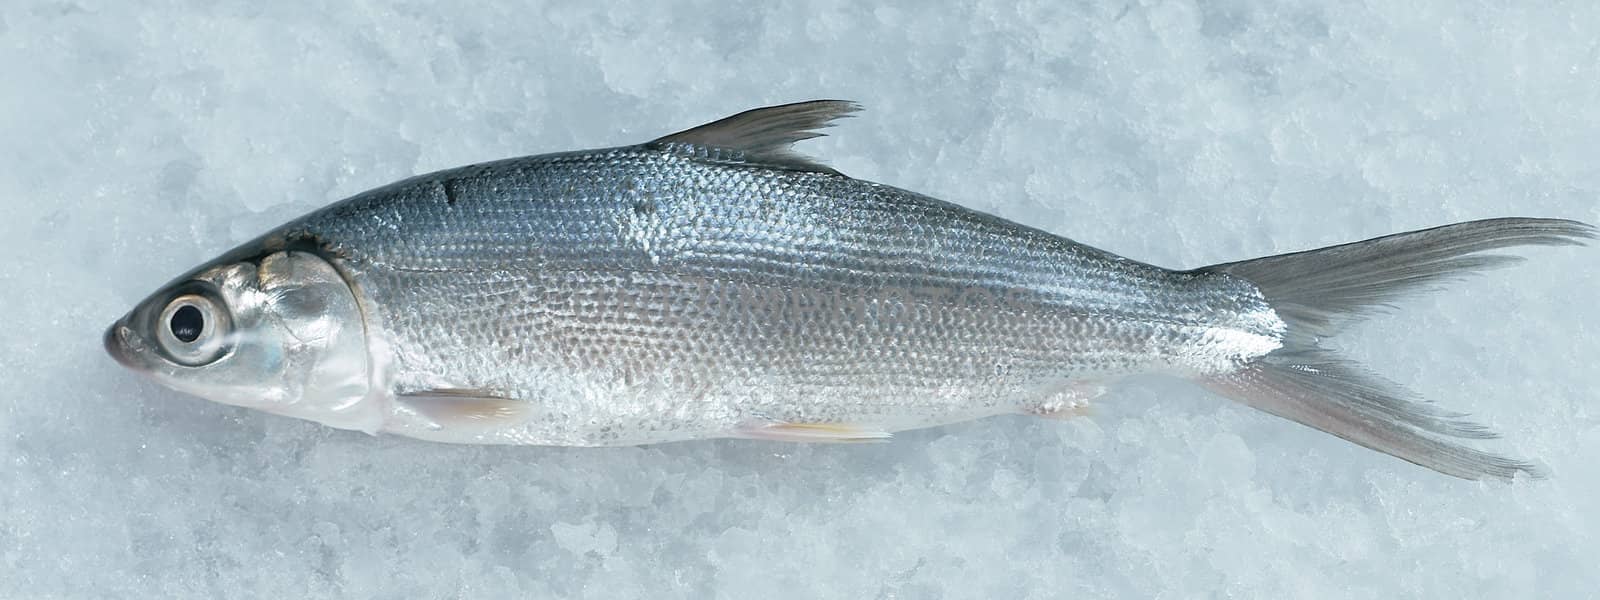 Image series of fish.